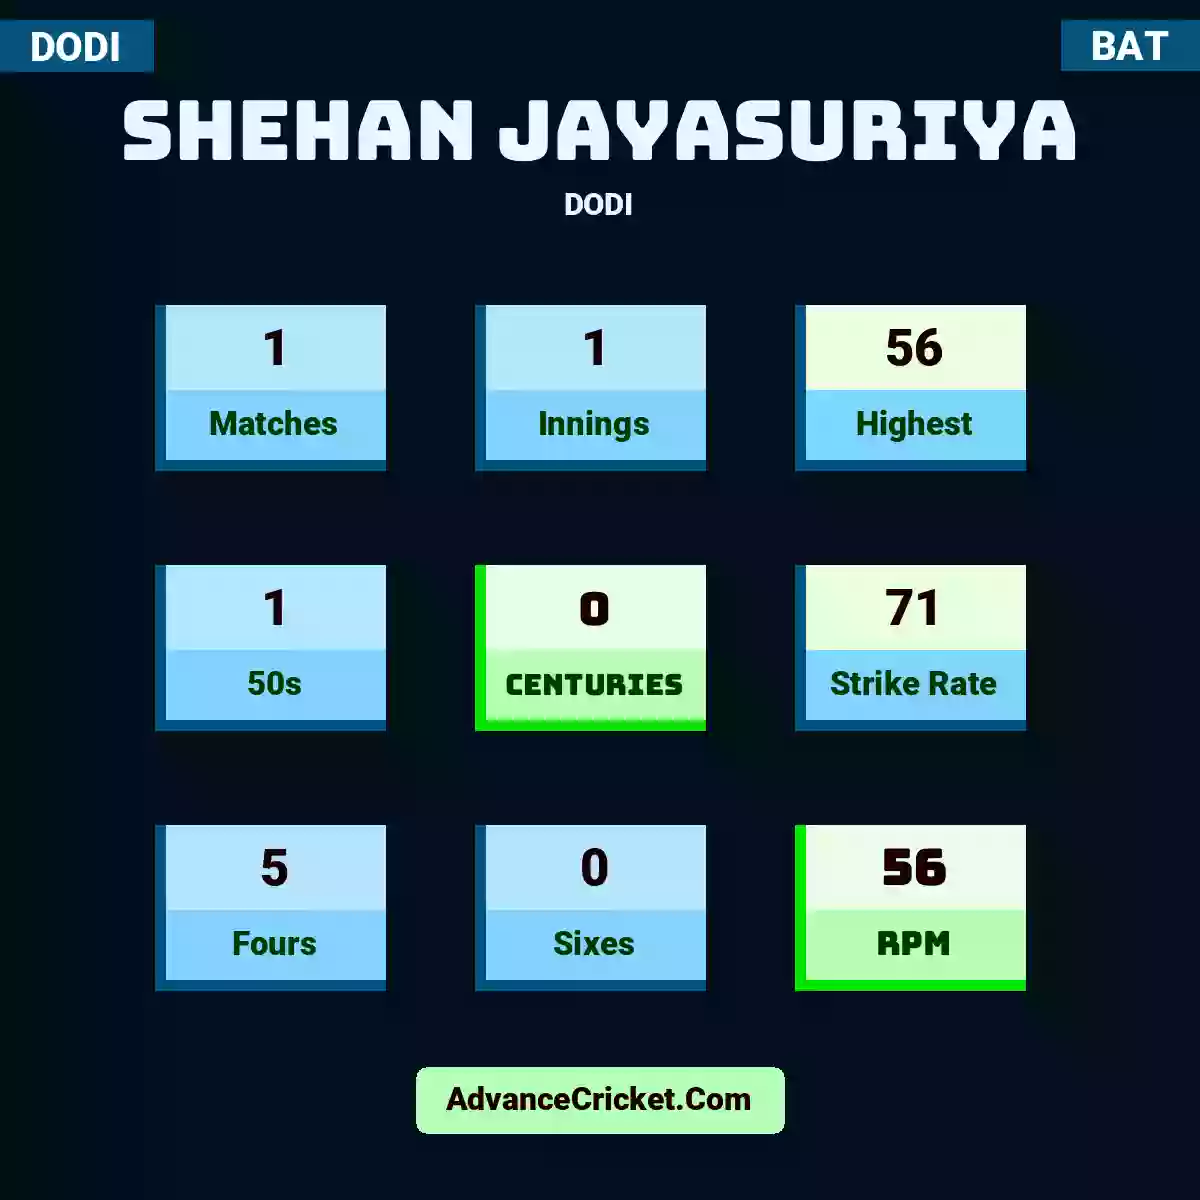 Shehan Jayasuriya DODI , Shehan Jayasuriya played 1 matches, scored 56 runs as highest, 1 half-centuries, and 0 centuries, with a strike rate of 71. S.Jayasuriya hit 5 fours and 0 sixes, with an RPM of 56.